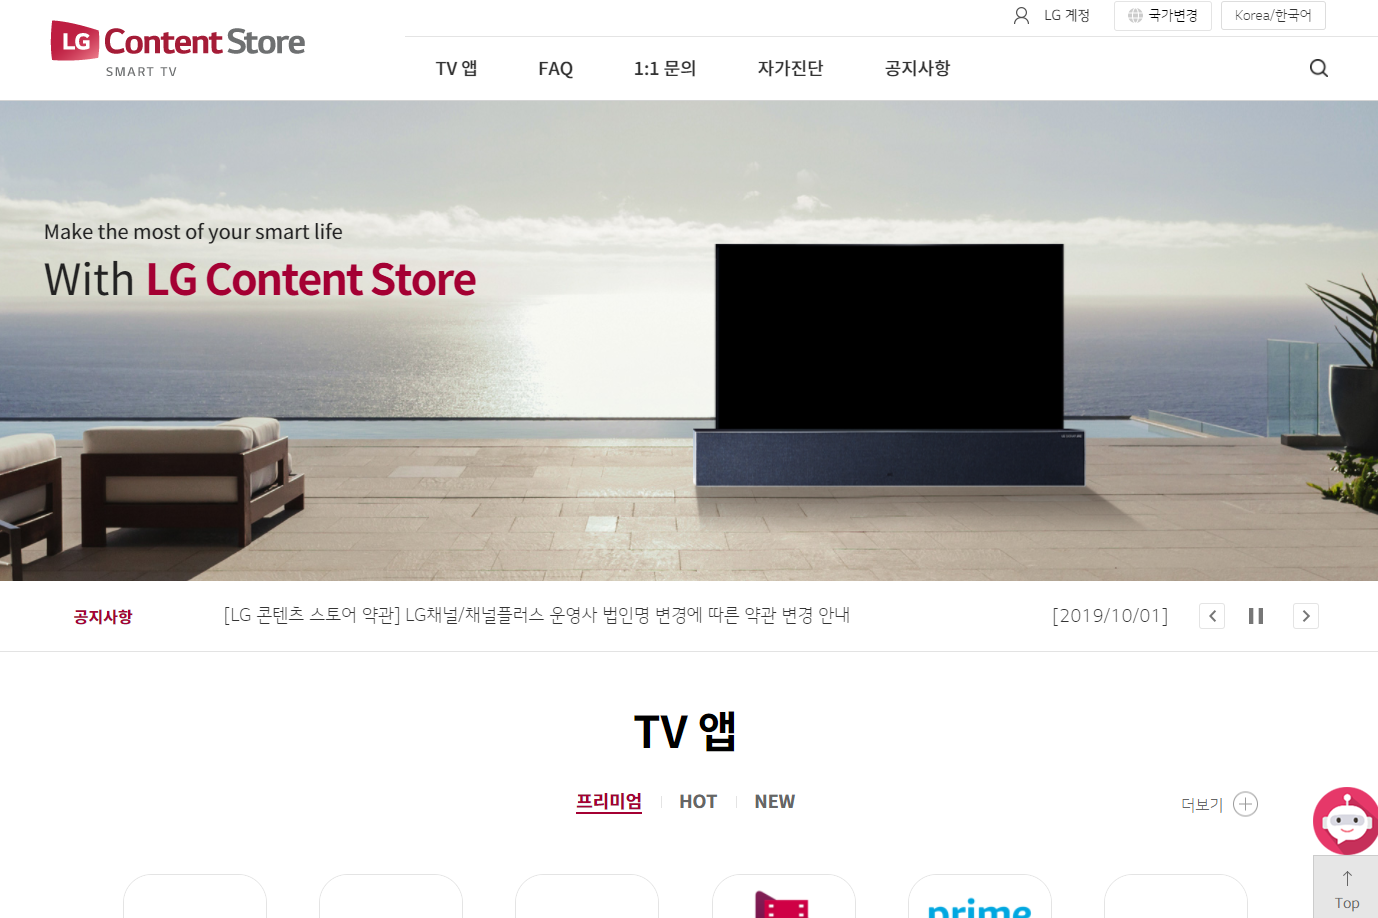 LG Content Store 대표 홈페이지 스크릿샷